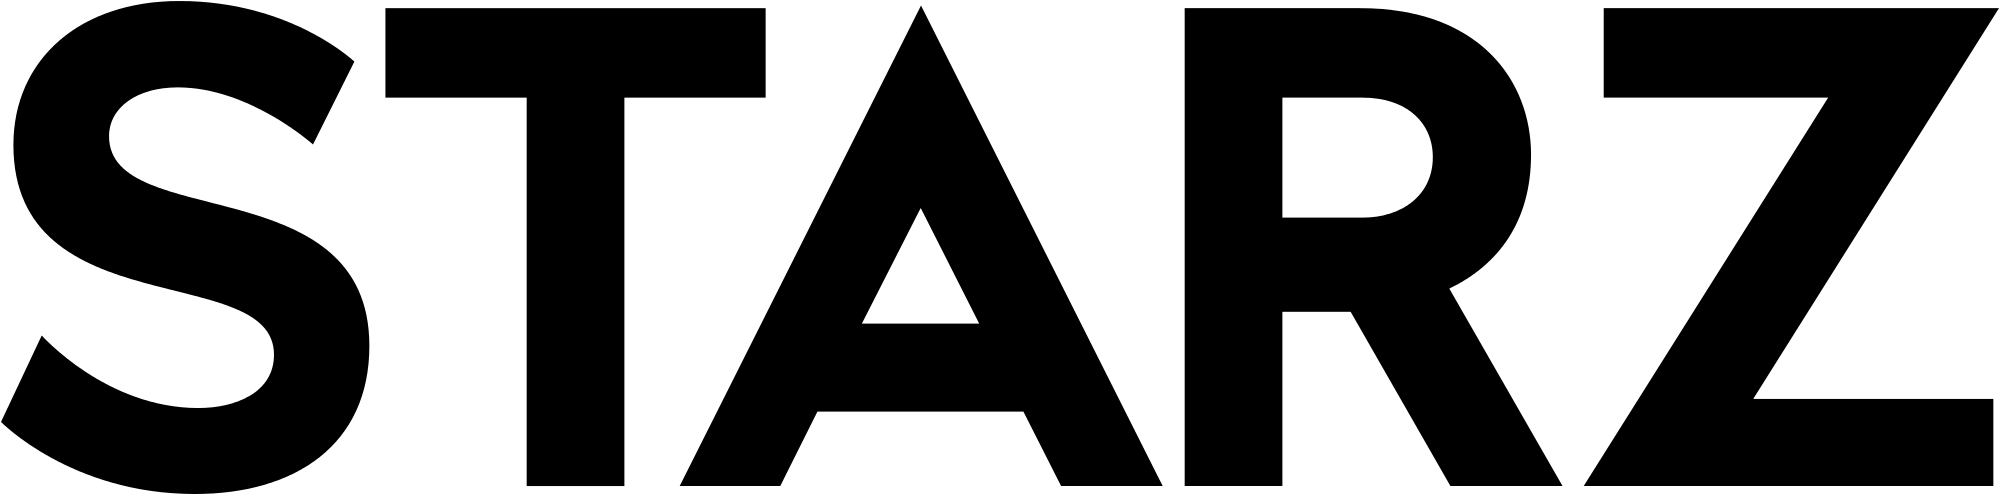 Starz Logo.png